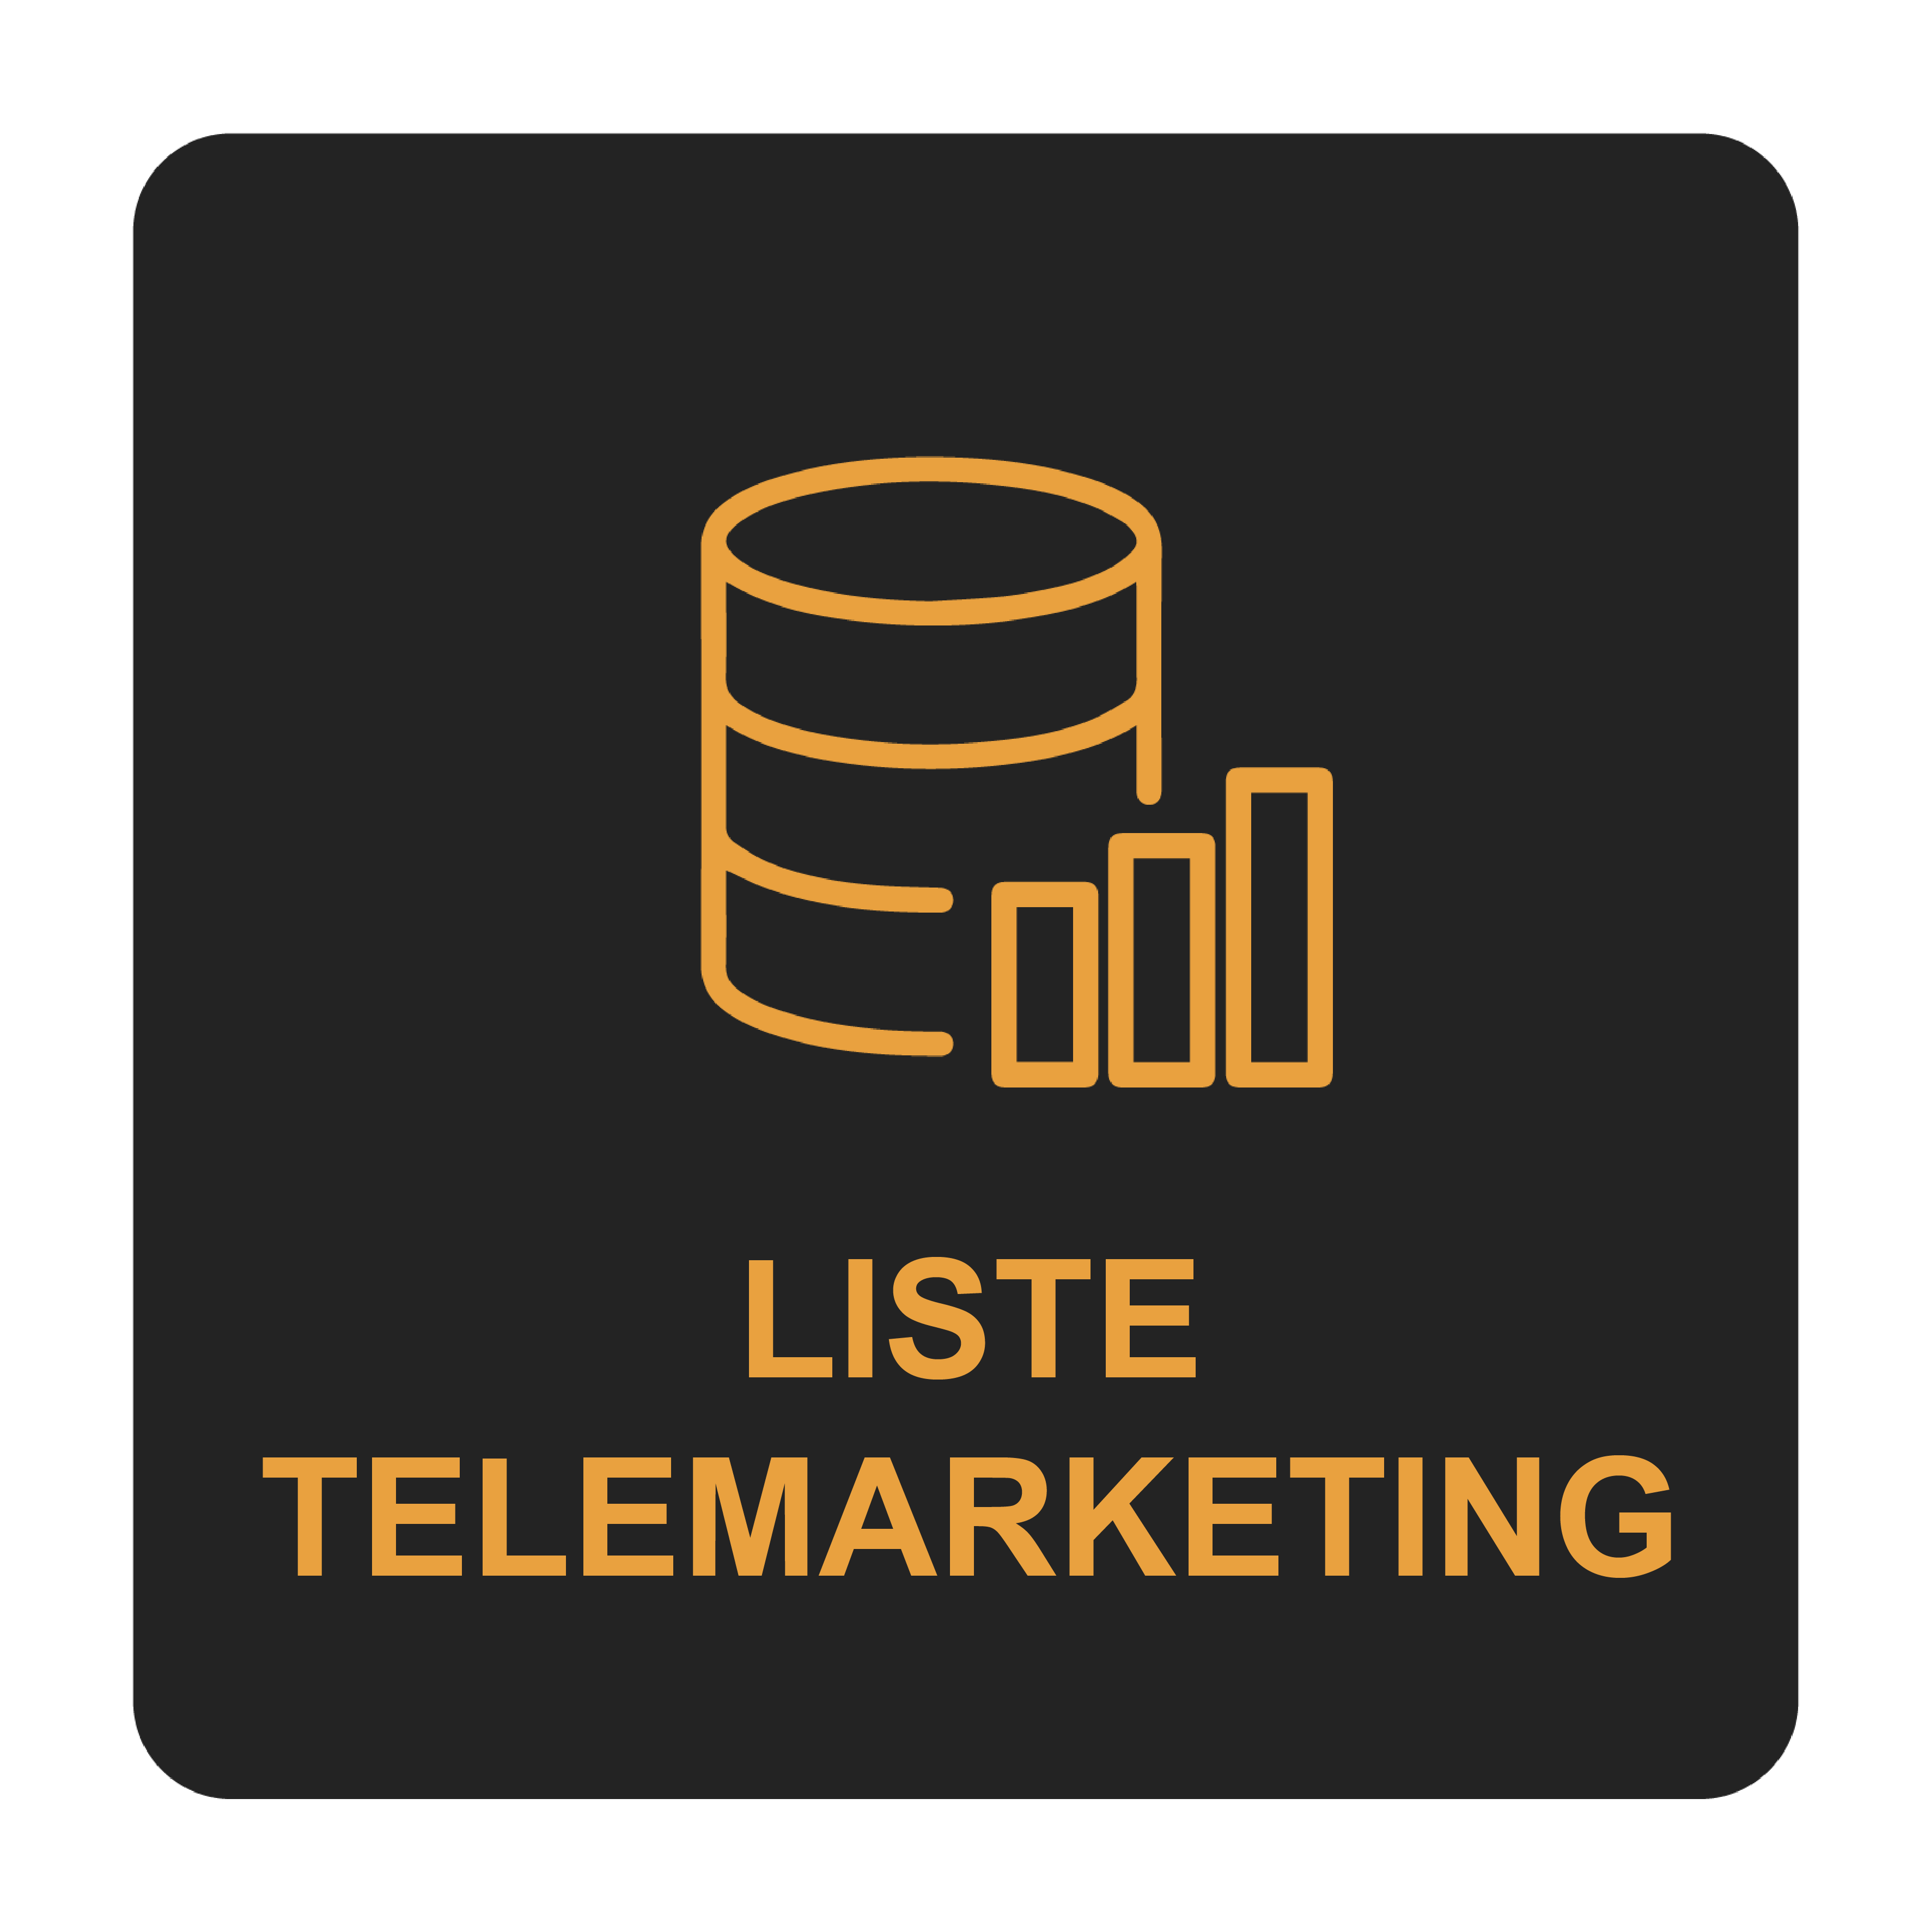 database per telemarketing